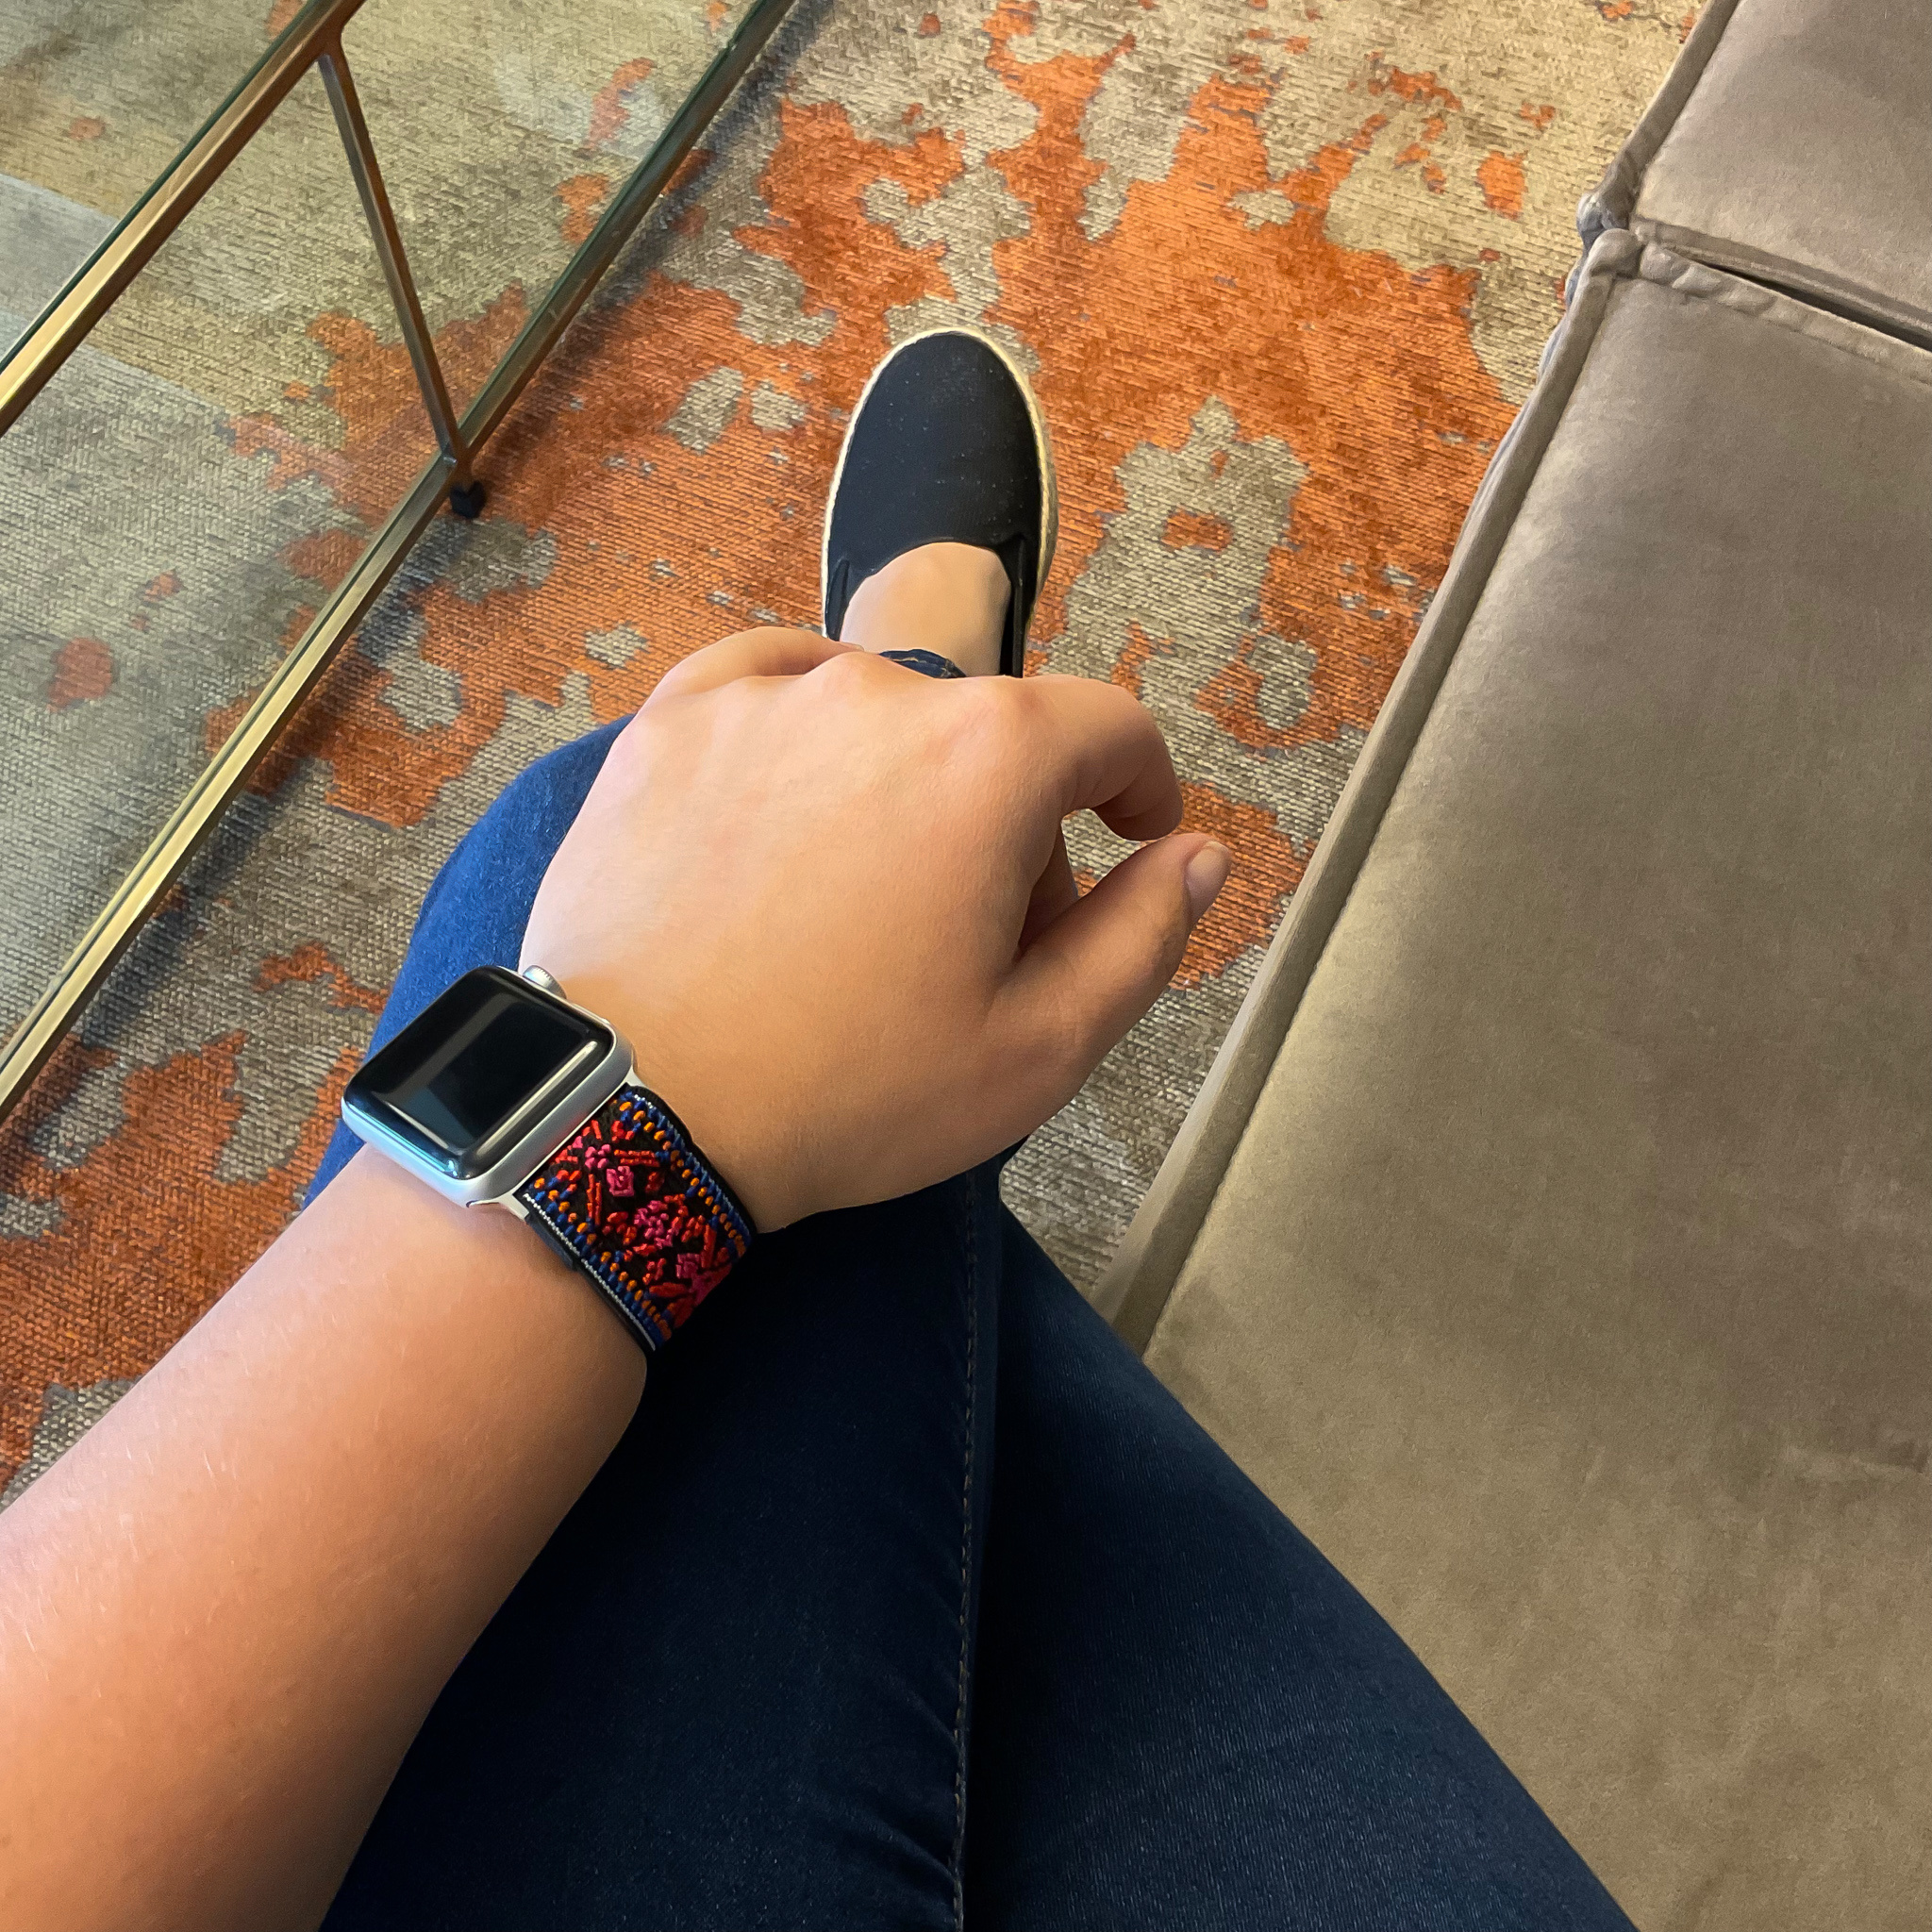 Apple Watch nylon geweven band - bohemian rood